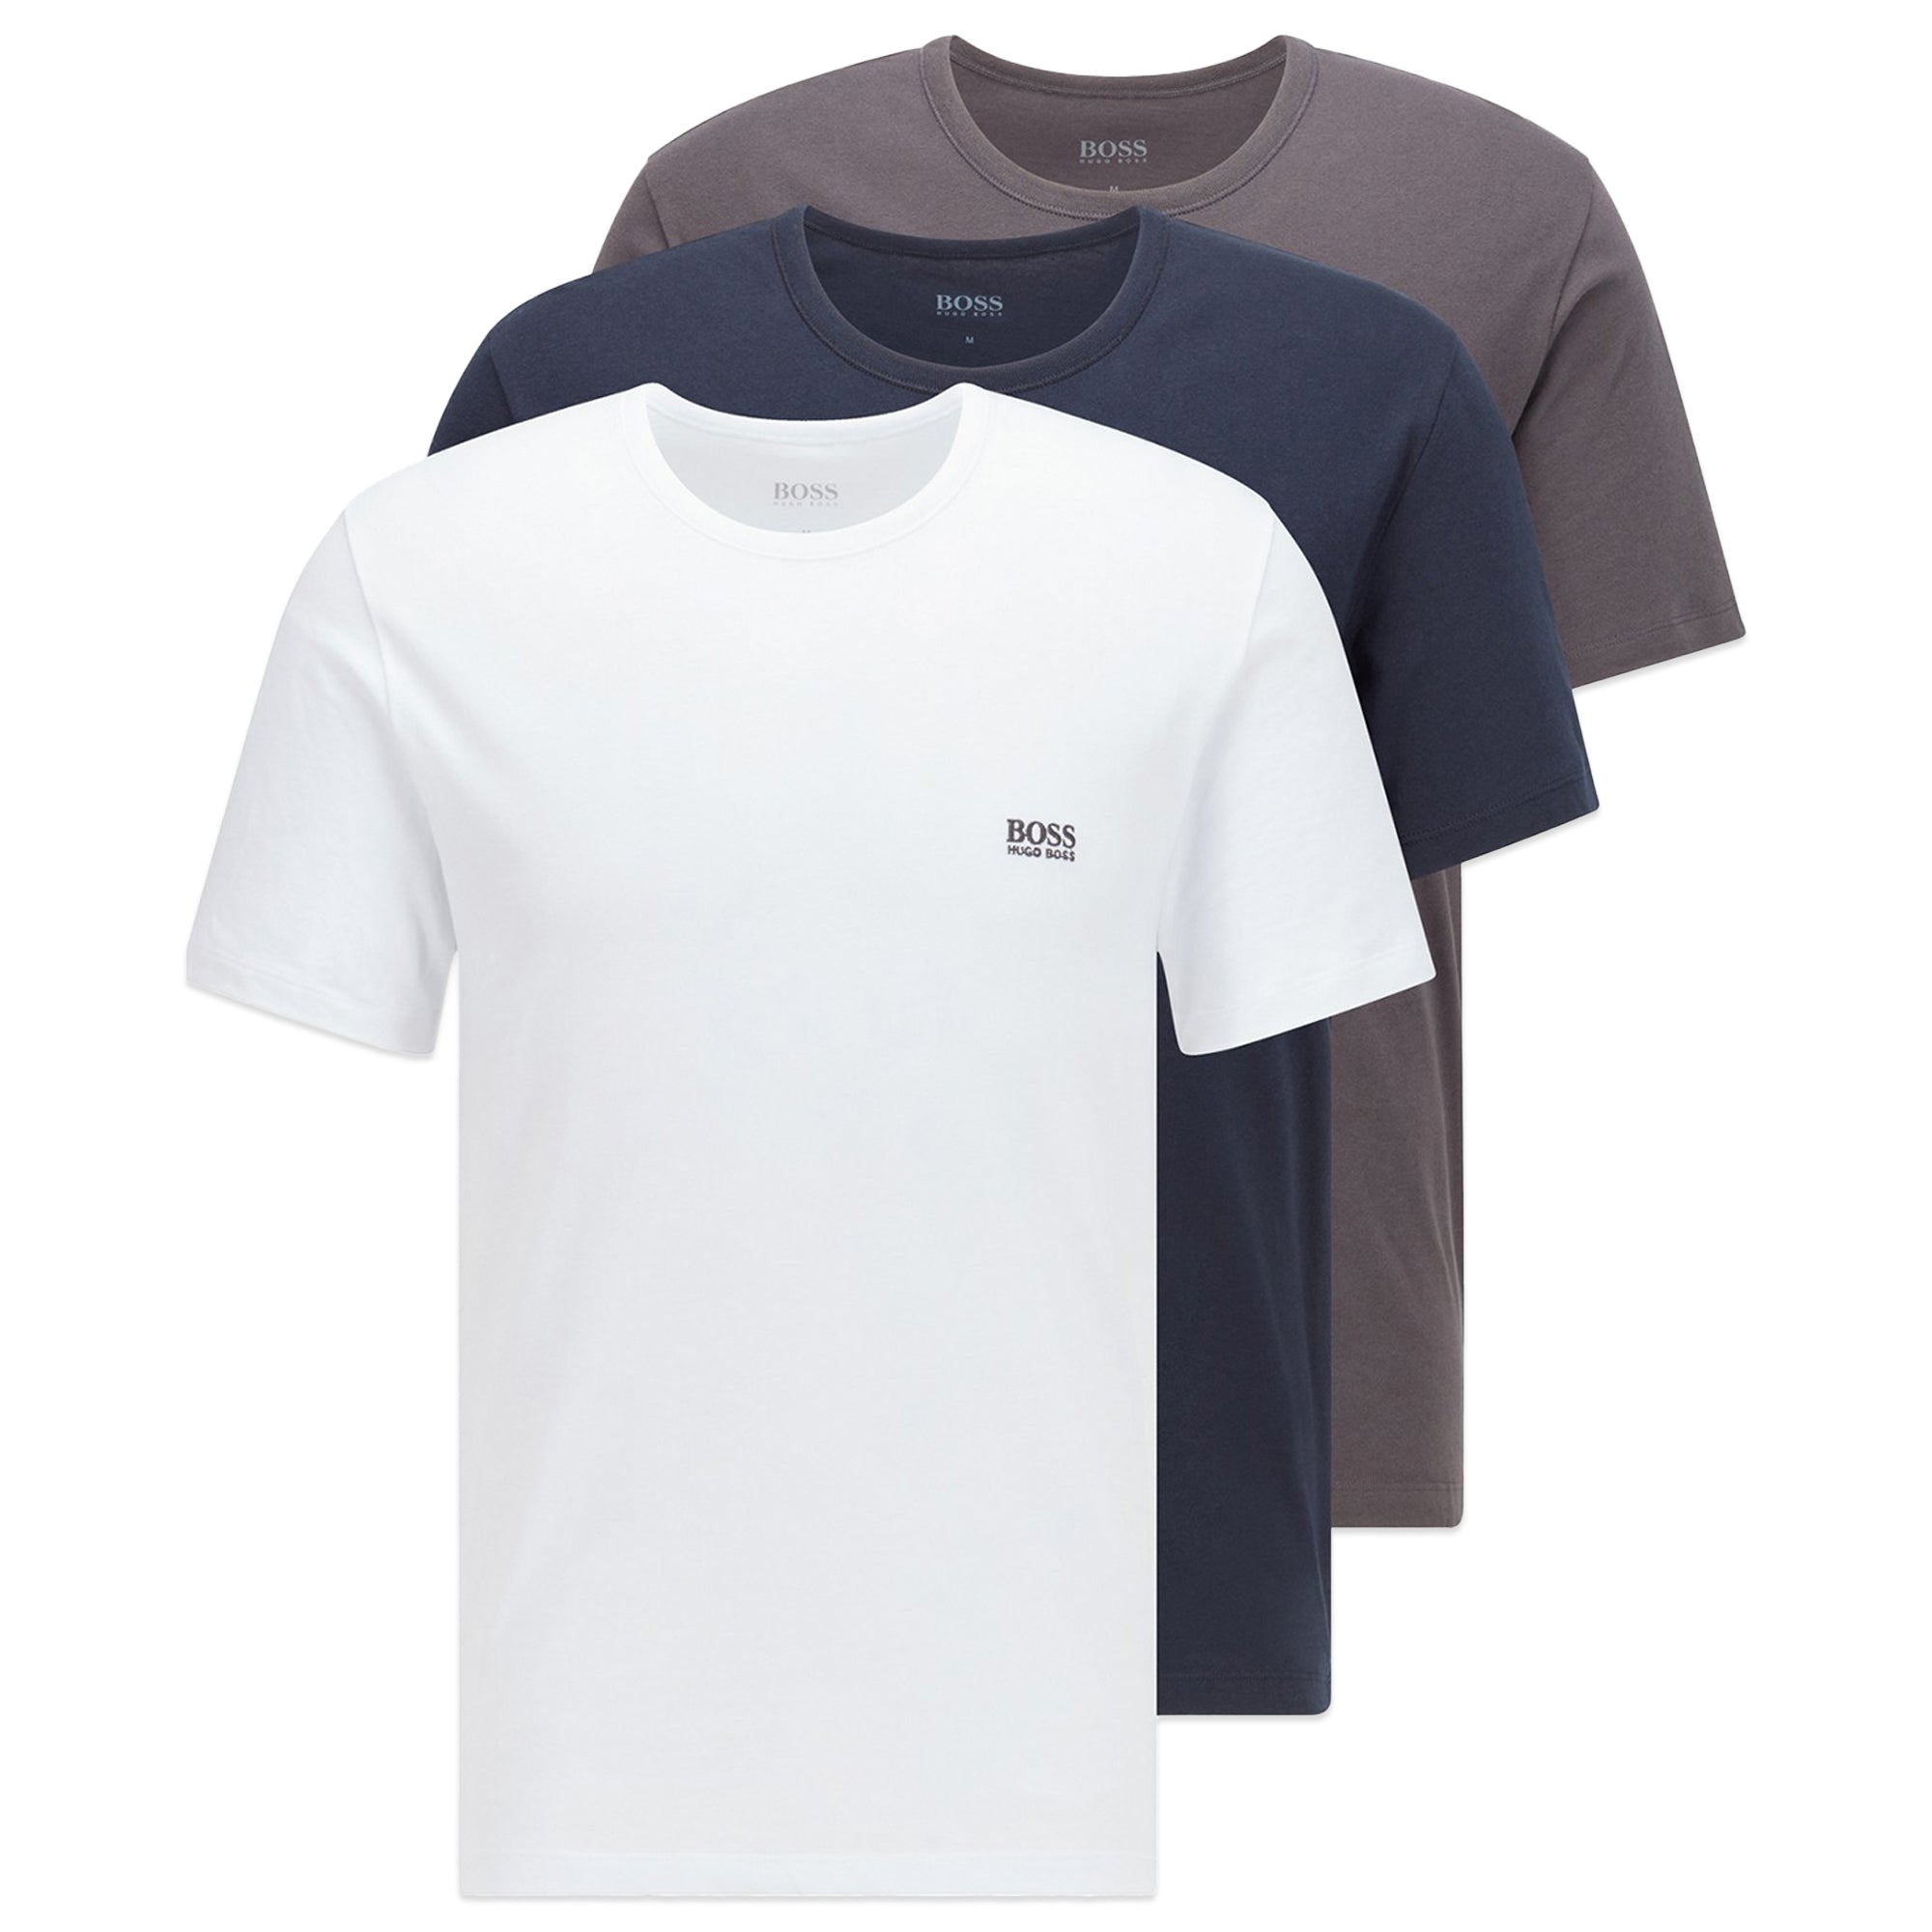 Boss 3 Pack Cotton T-Shirts - White/Blue/Grey